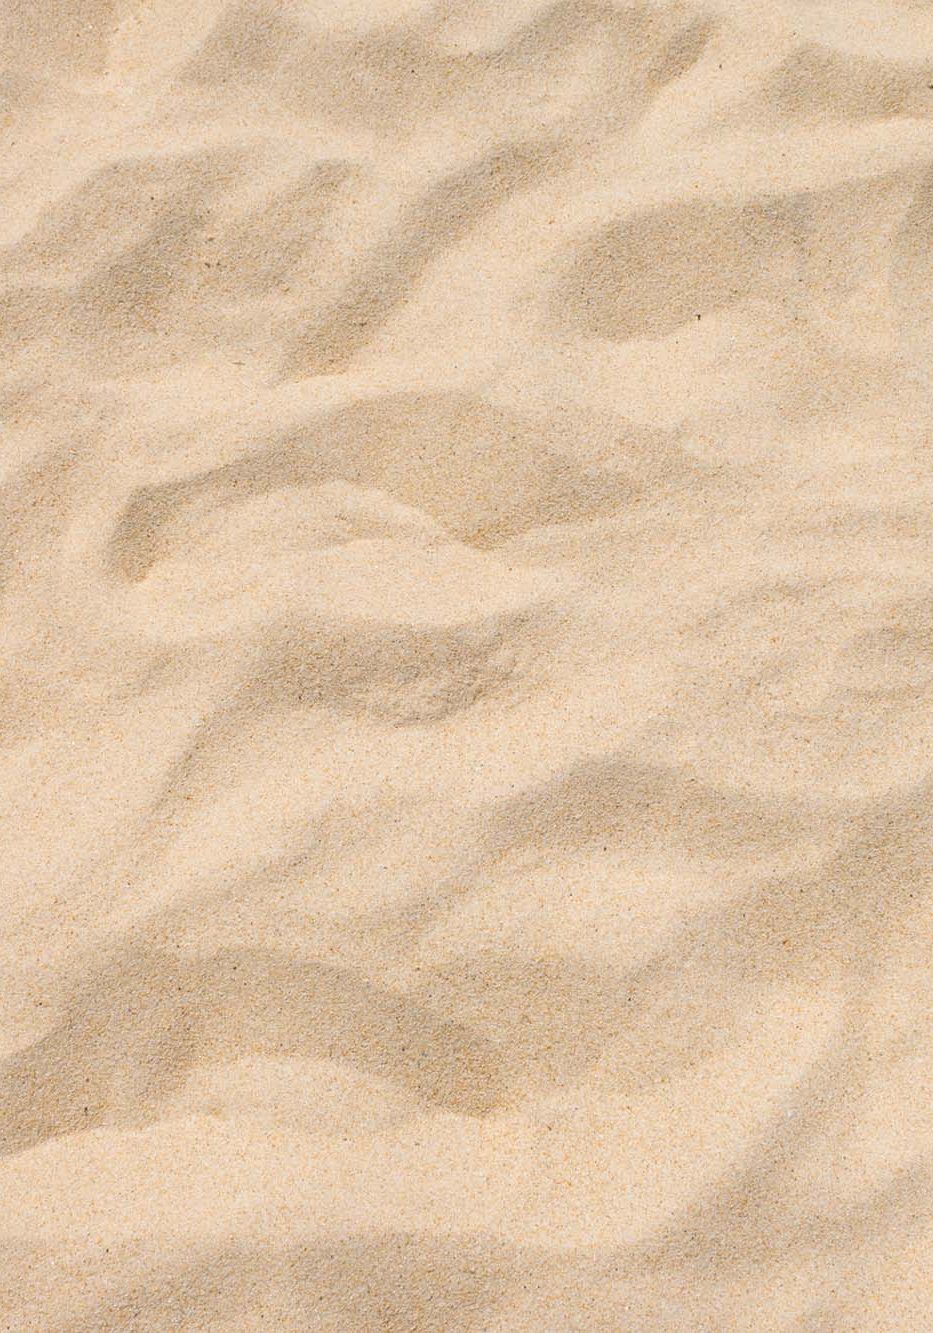 Fine beach sand in the summer sun.